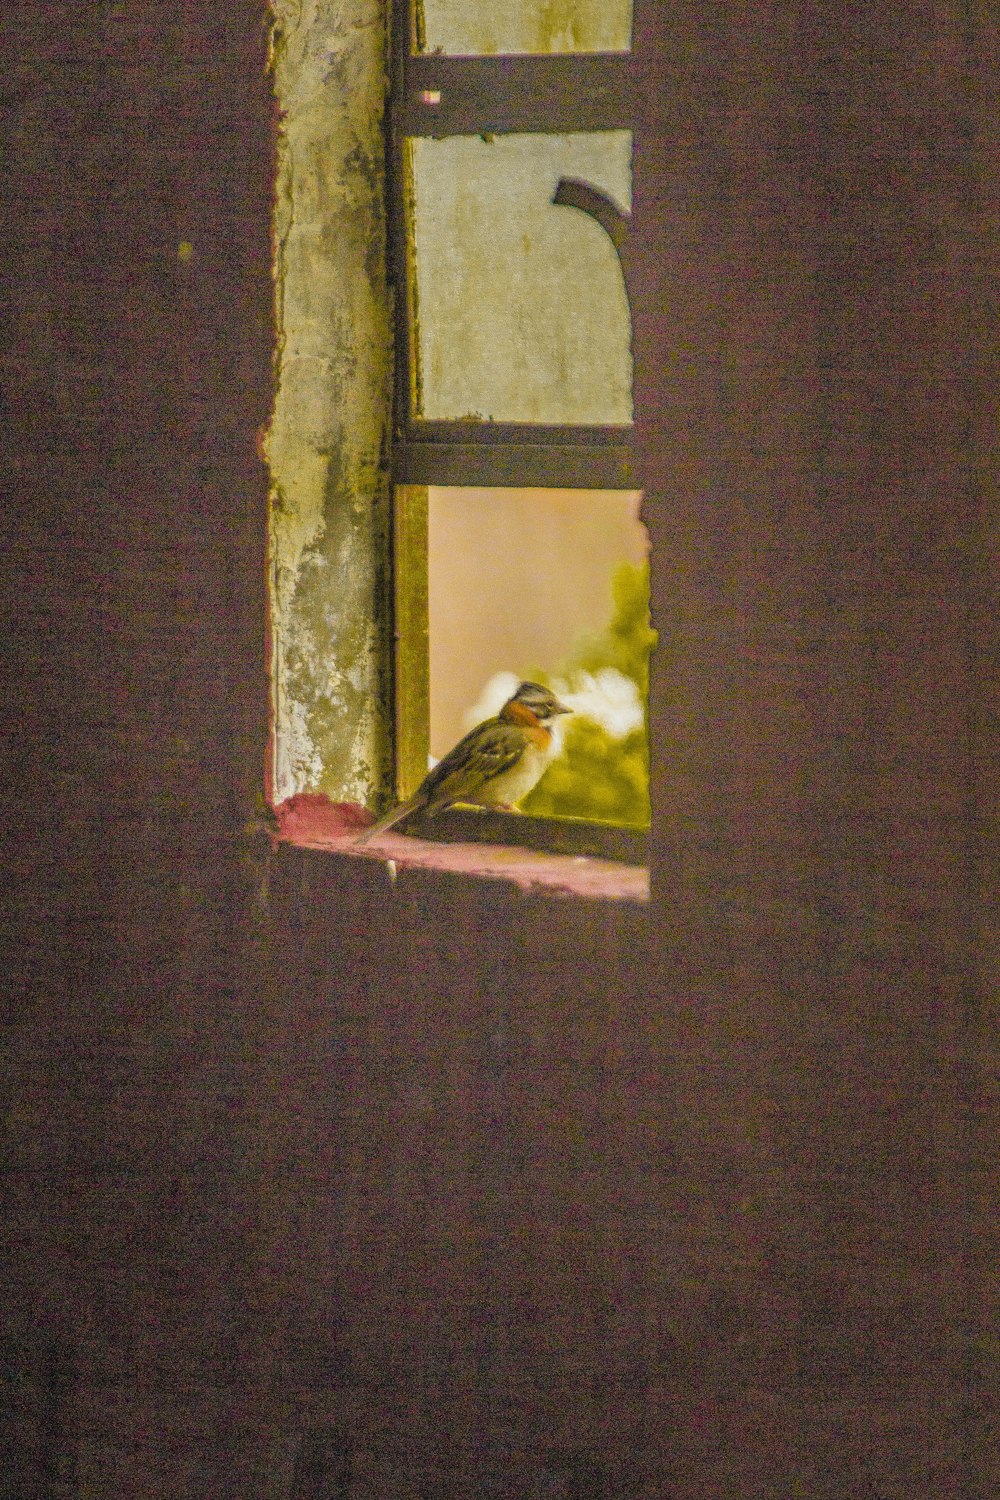 yellow bird on brown wooden window